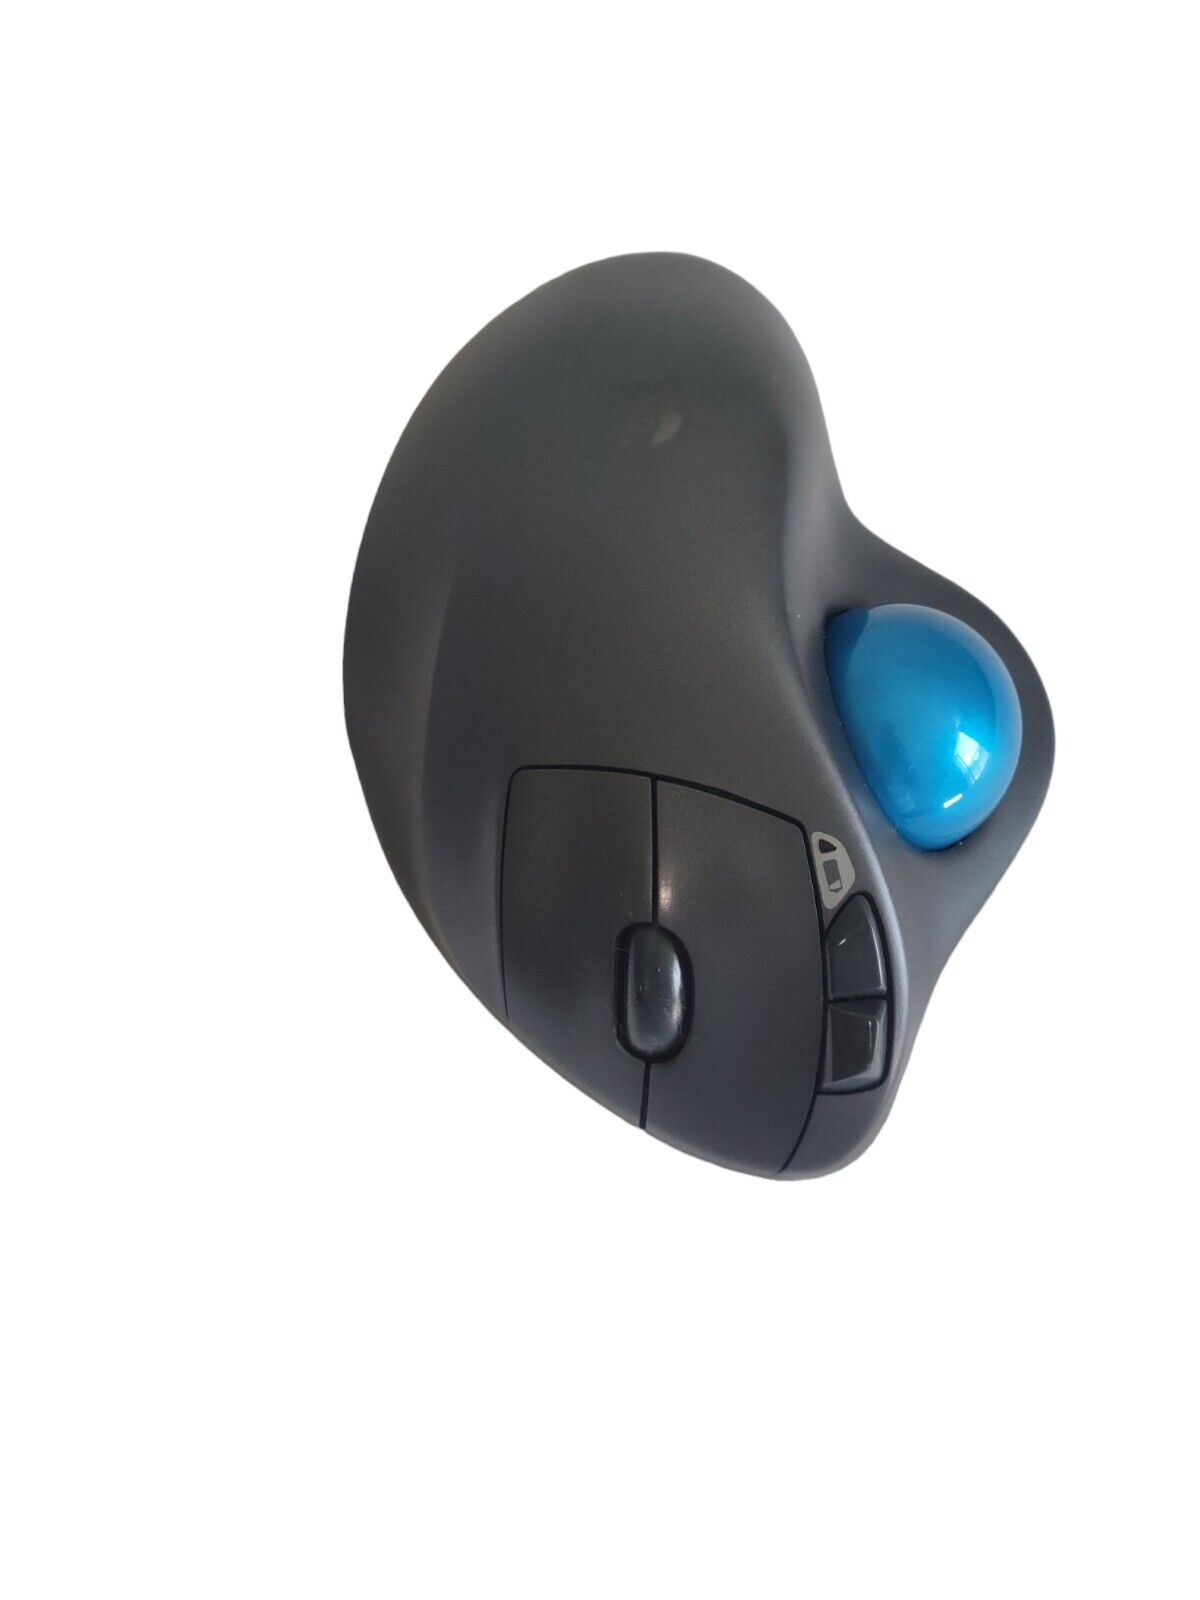 Logitech M570 Wireless Trackball Mouse *tested*